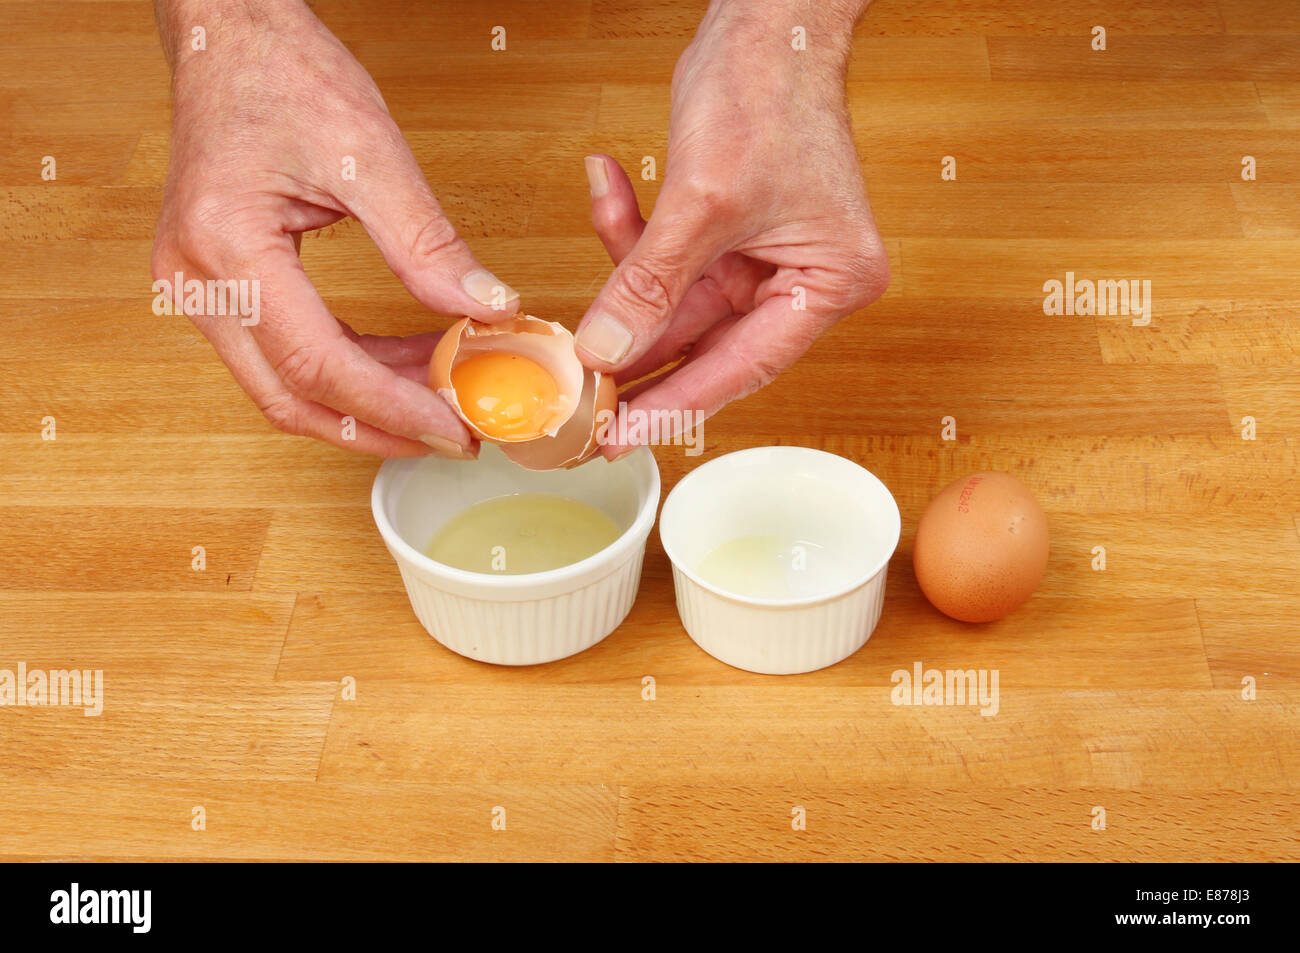 Hands separating egg yolks into ramekins on a wooden worktop Stock Photo